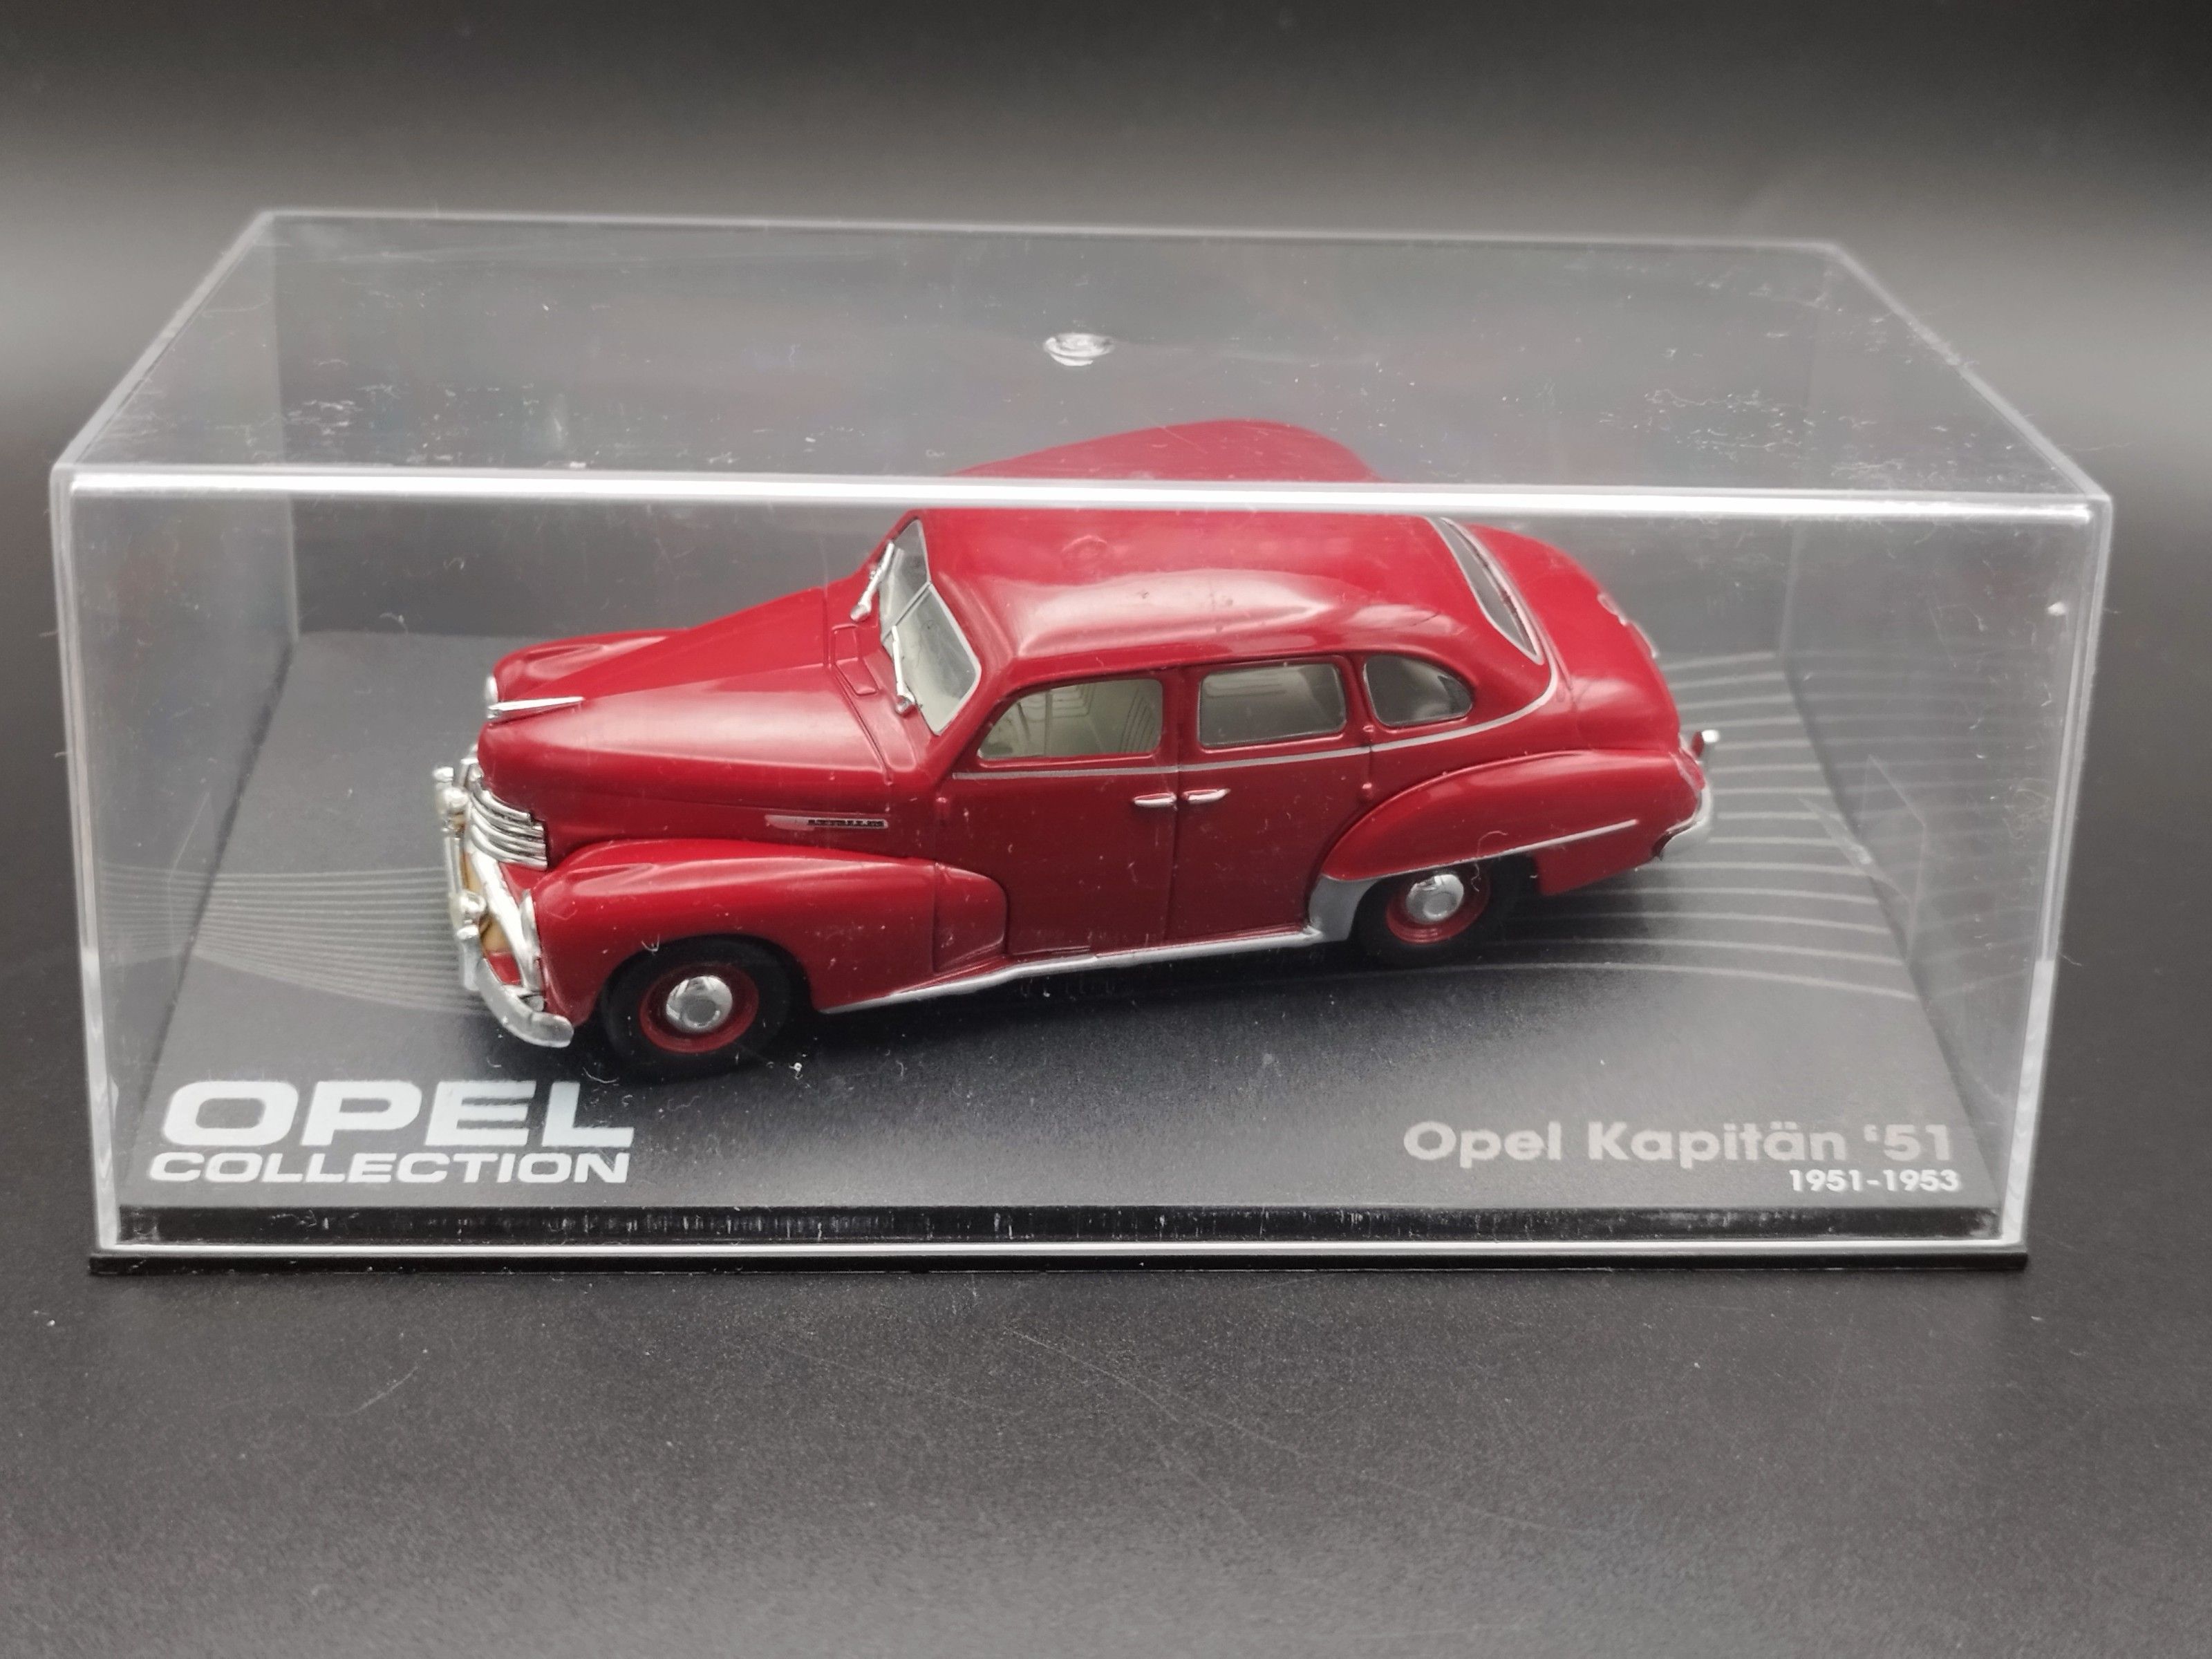 1:43 Opel Collection 1951-53 Opel Kapitan 51 model używany